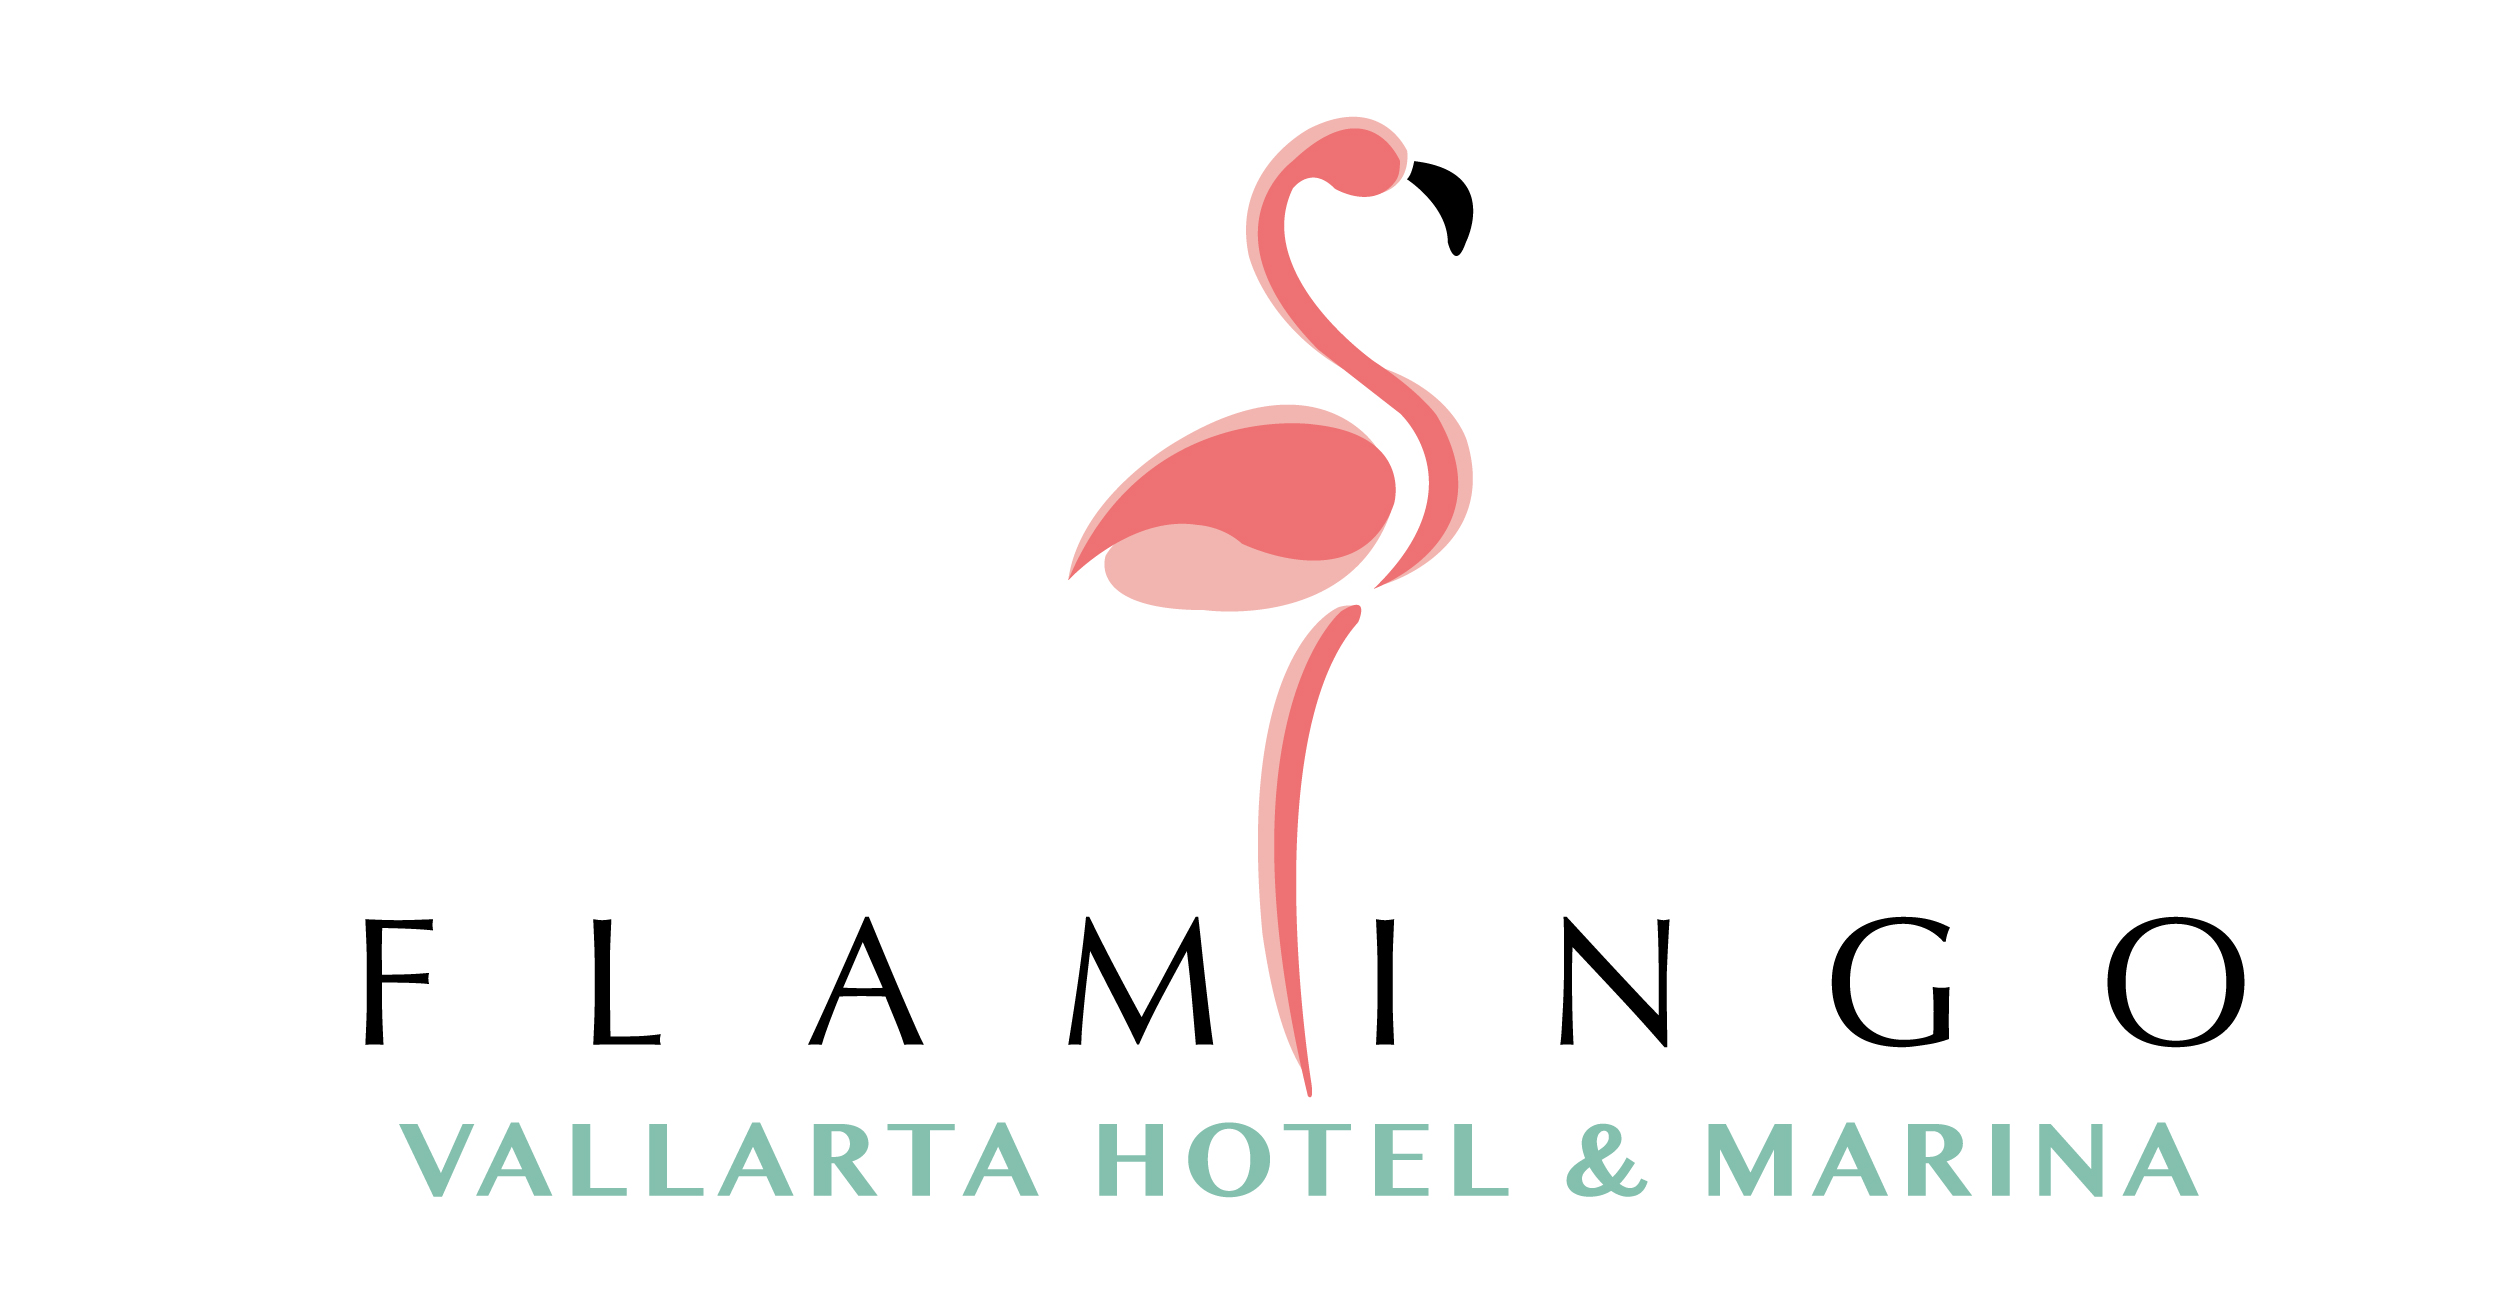 (c) Flamingovallarta.com